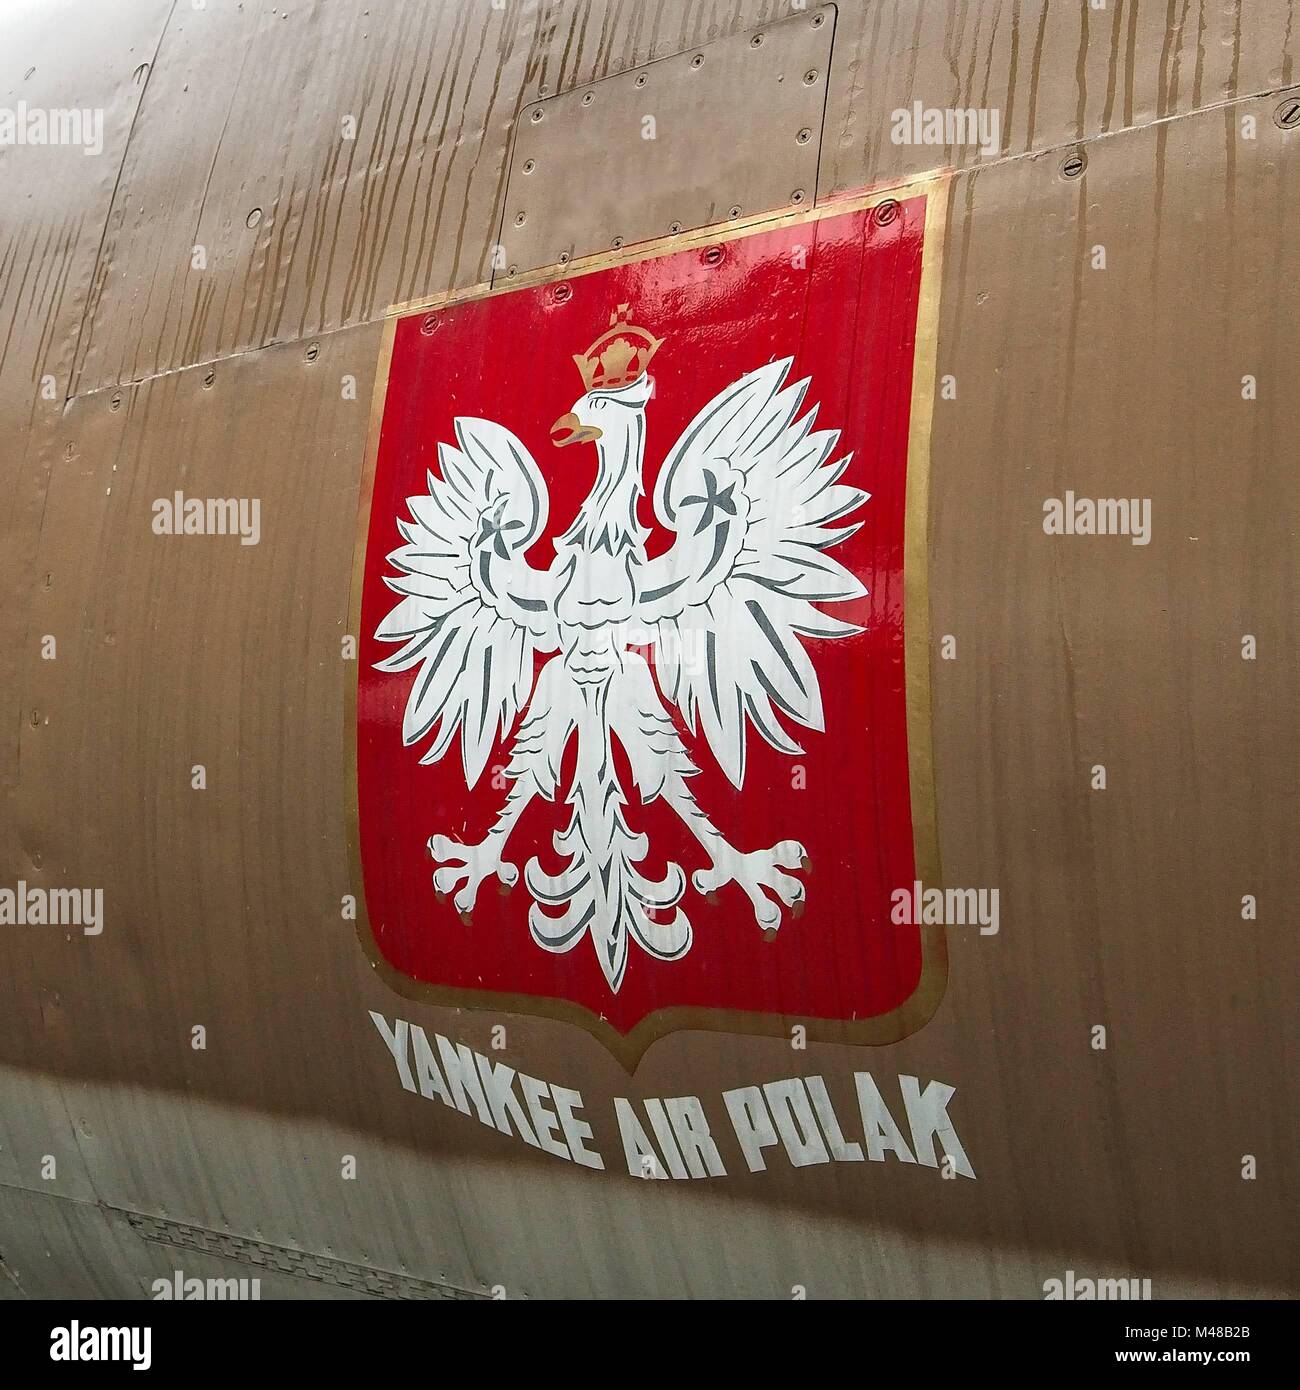 Yankee Air Polak - Polish emblem on the plane fuselage in the rain Stock Photo